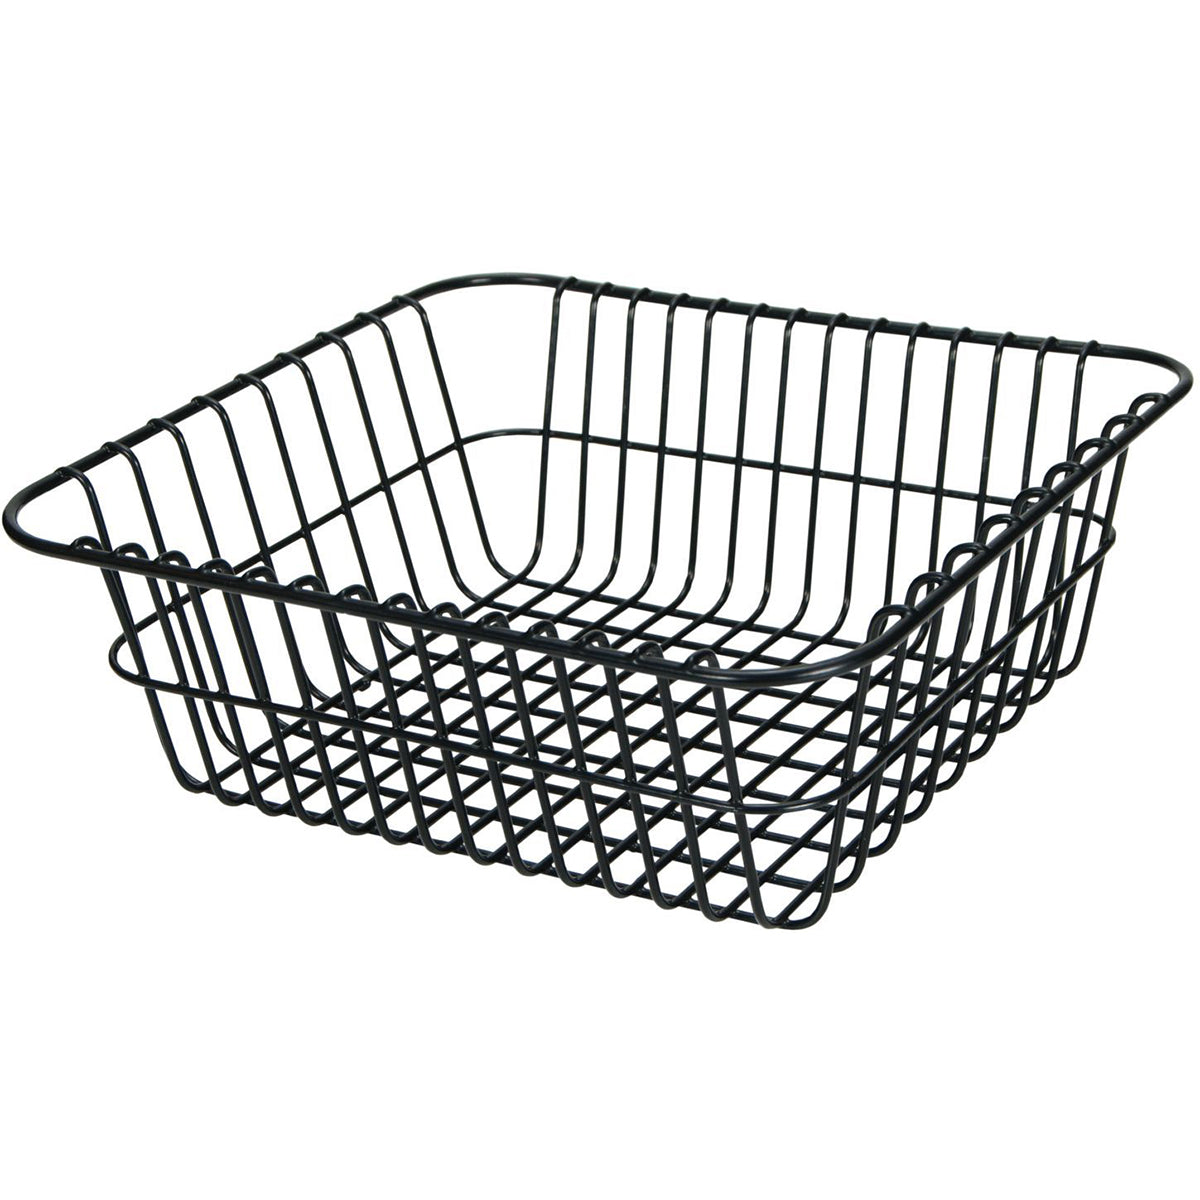 IGLOO Wire Basket for 55 qt. and 70 qt. Rotomold Coolers - Black IGLOO